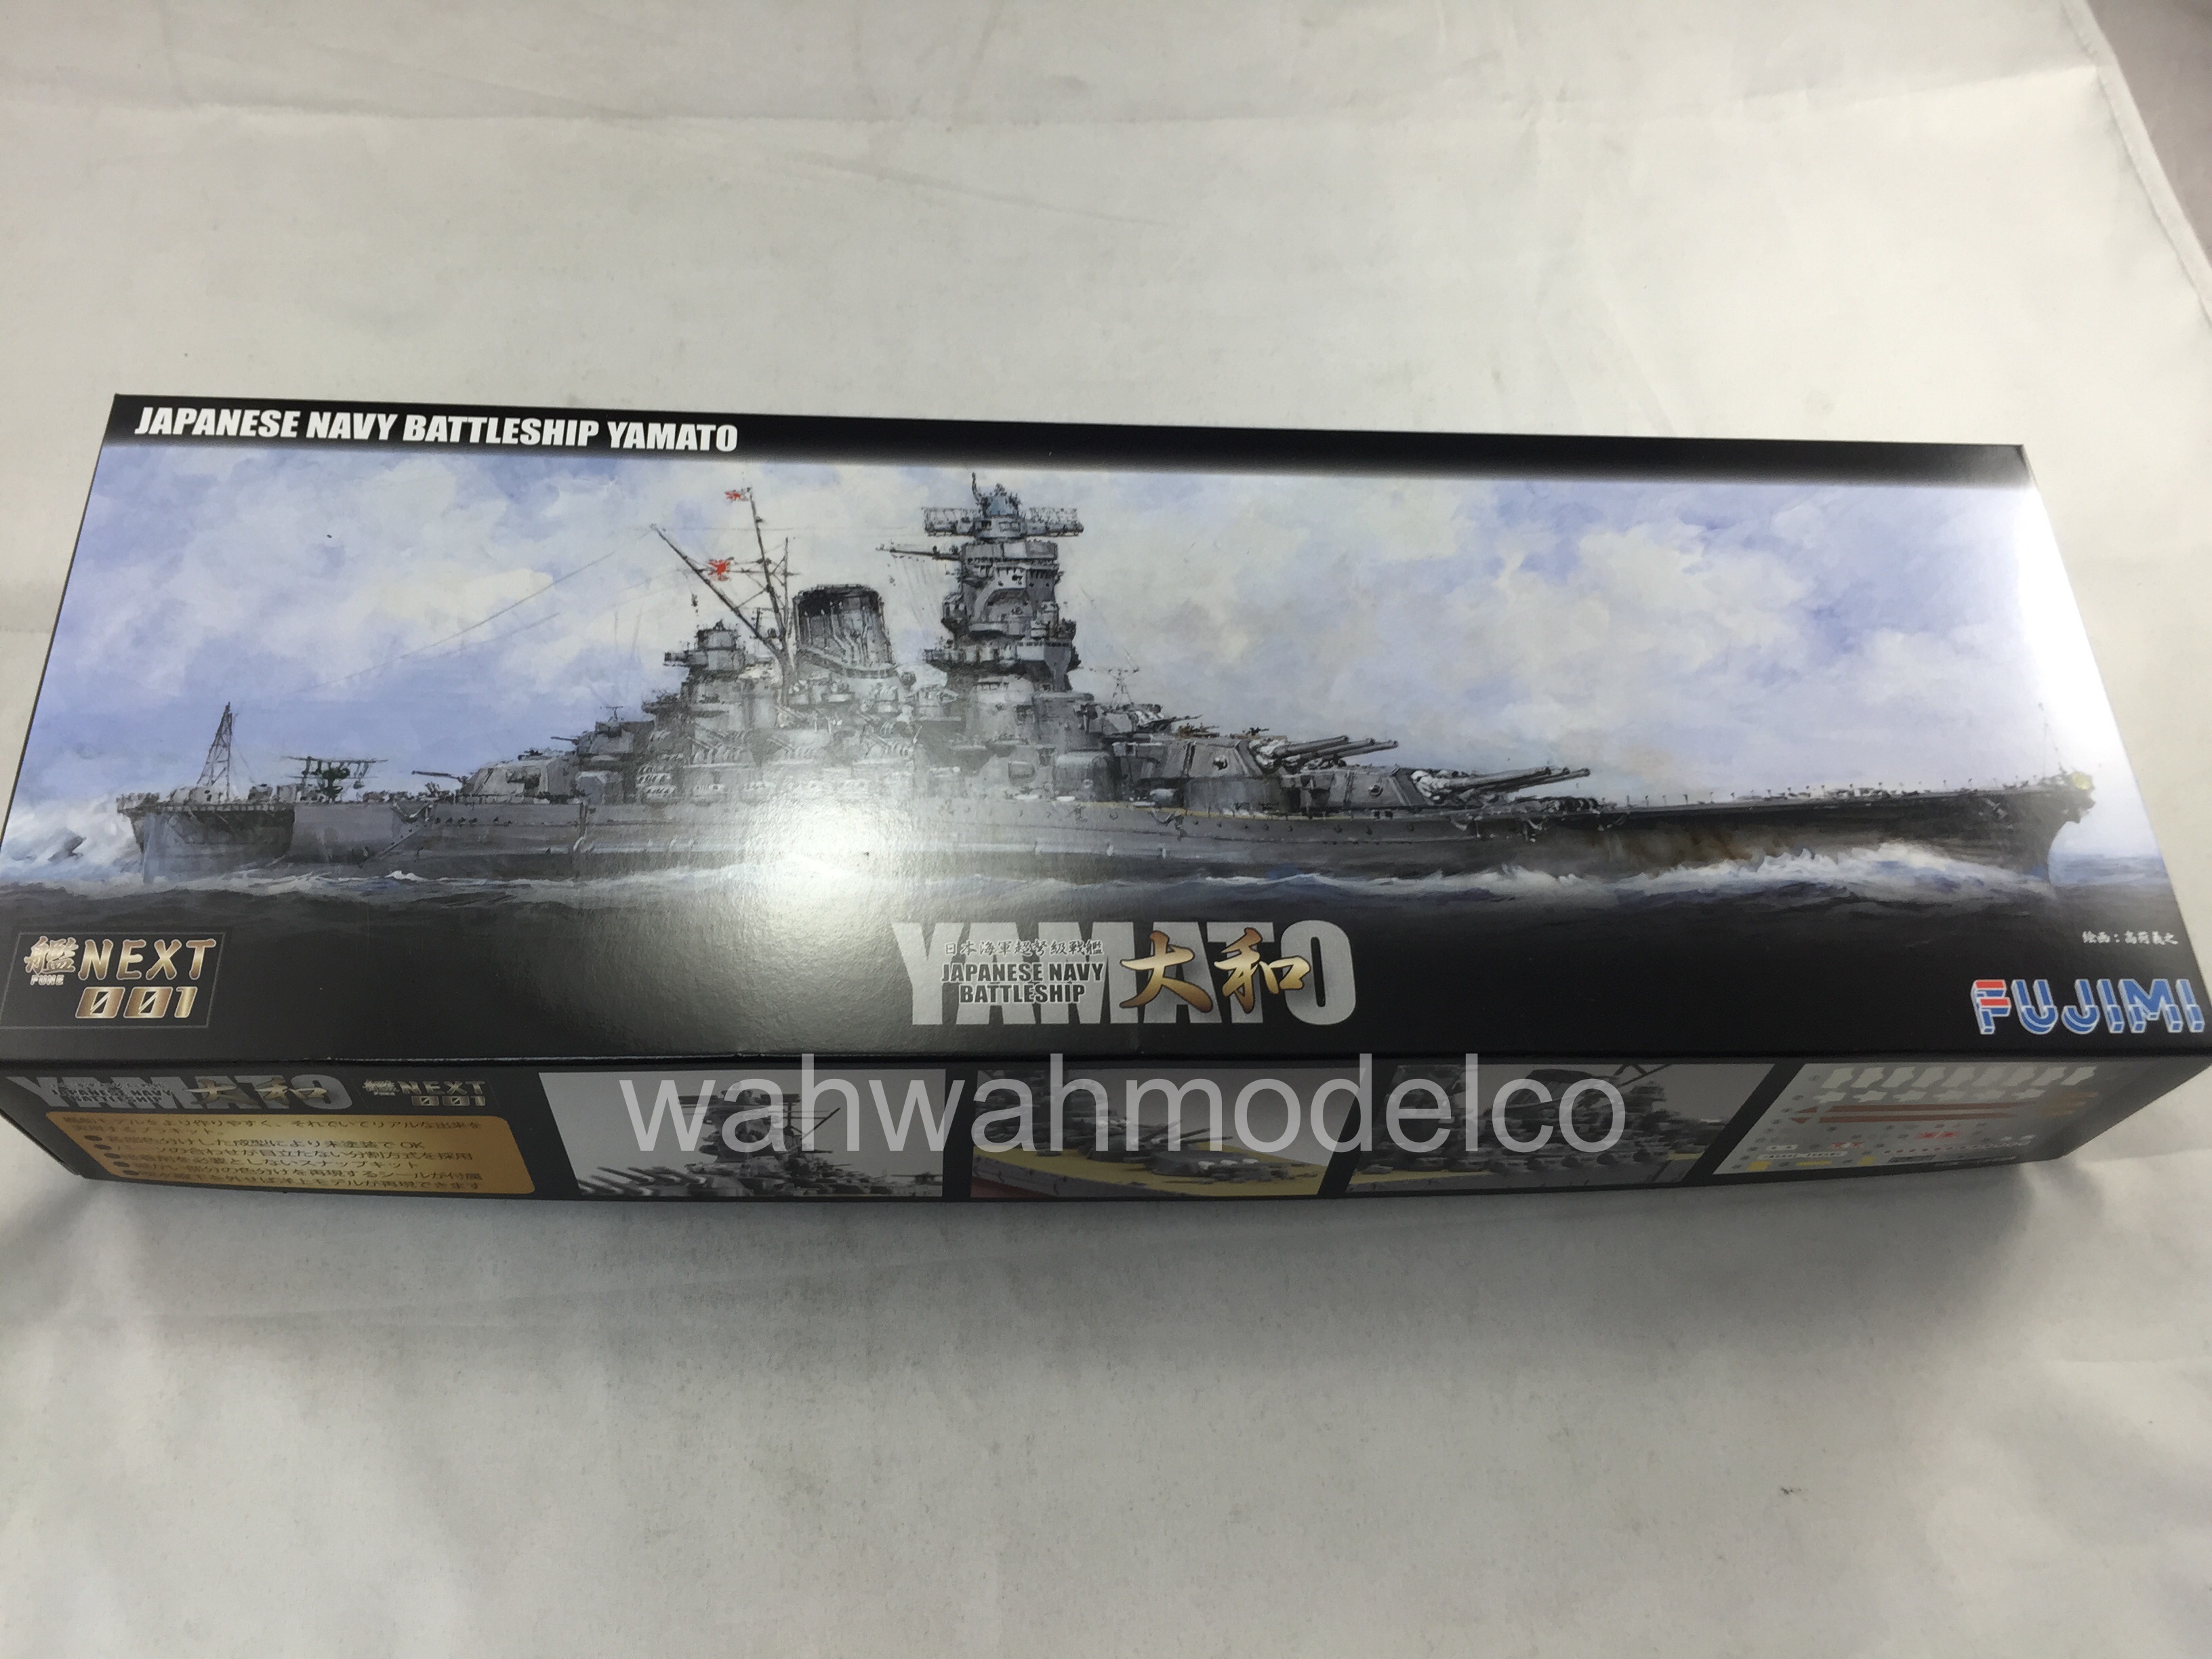 Fujimi model 1/700 special series No.1 Chodokyu battleship Yamato commissioned d